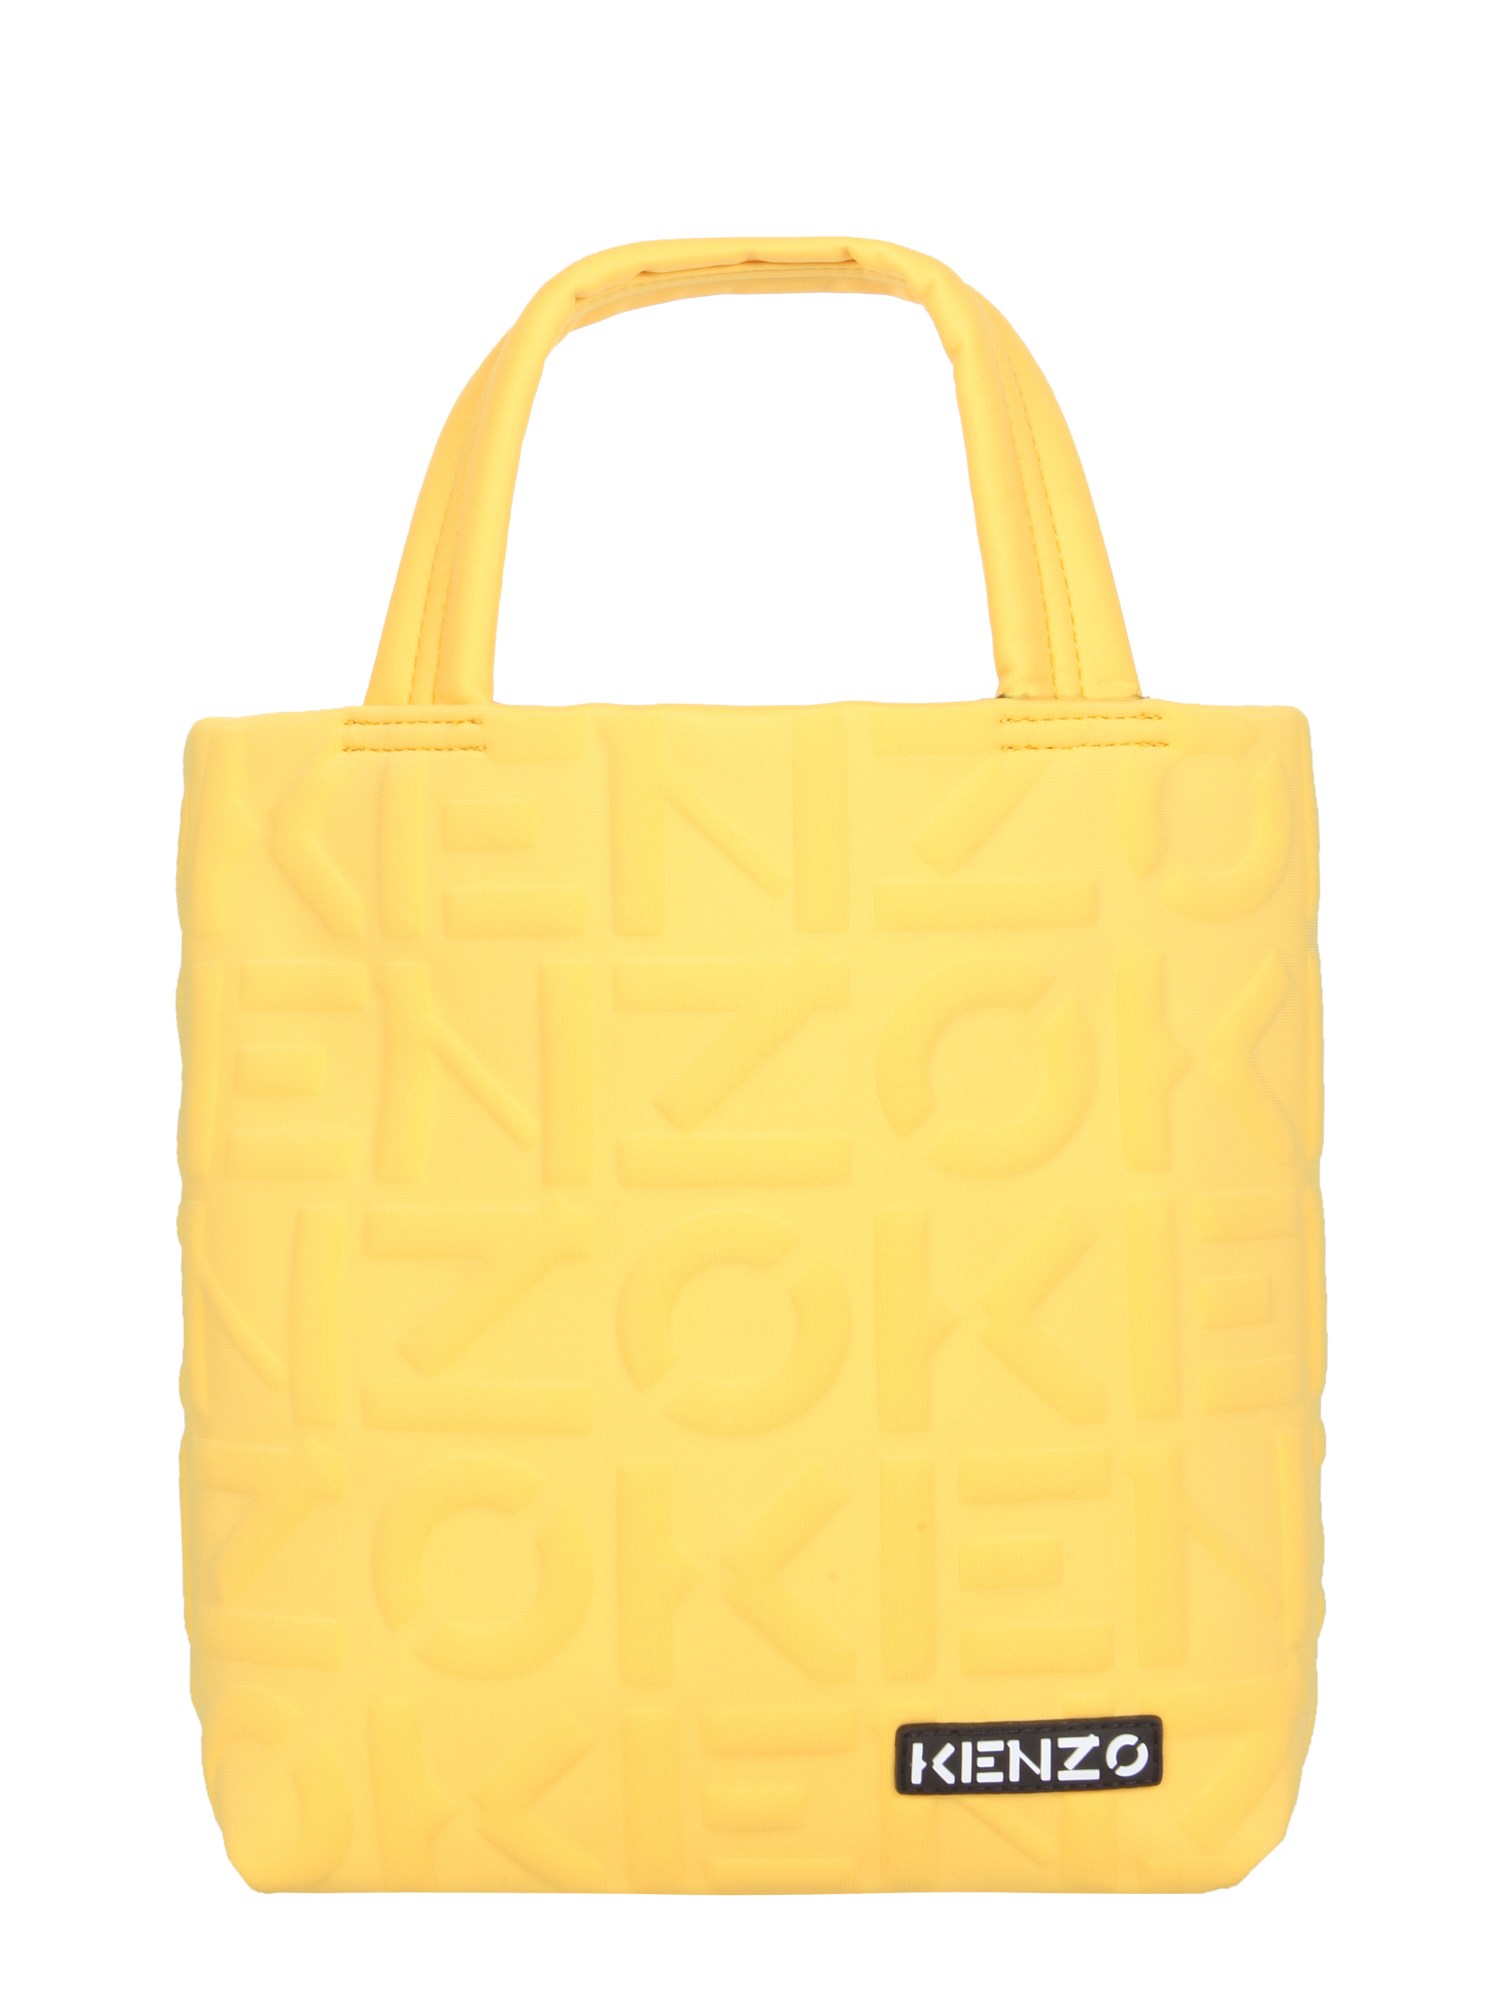 kenzo small tote bag with monogram logo